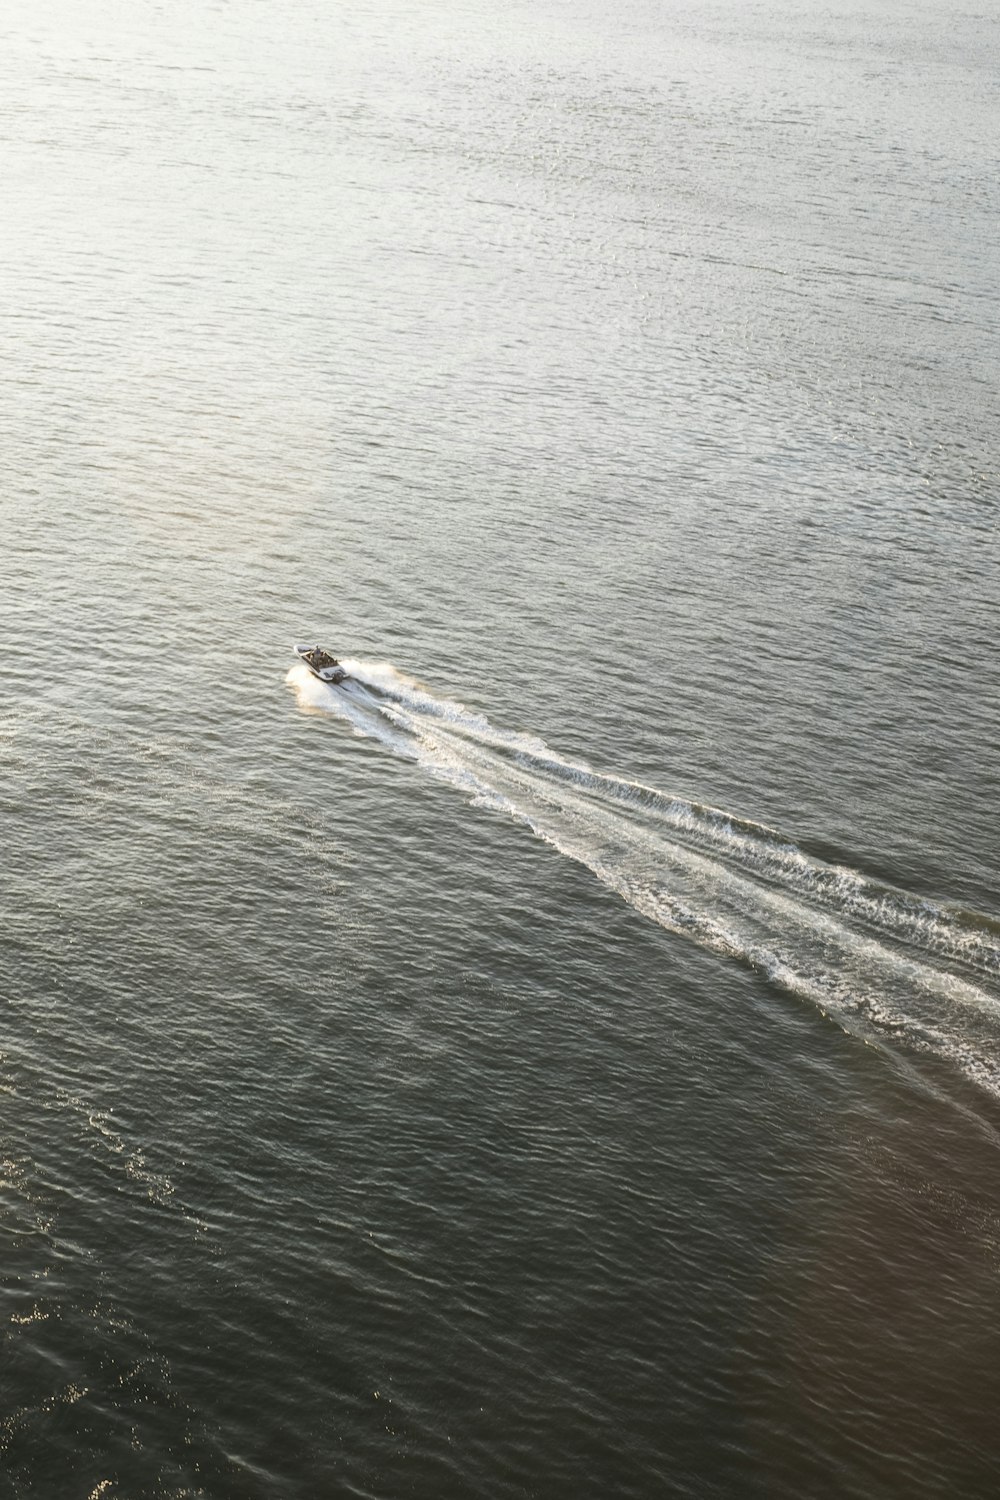 speedboat in ocean during daytime